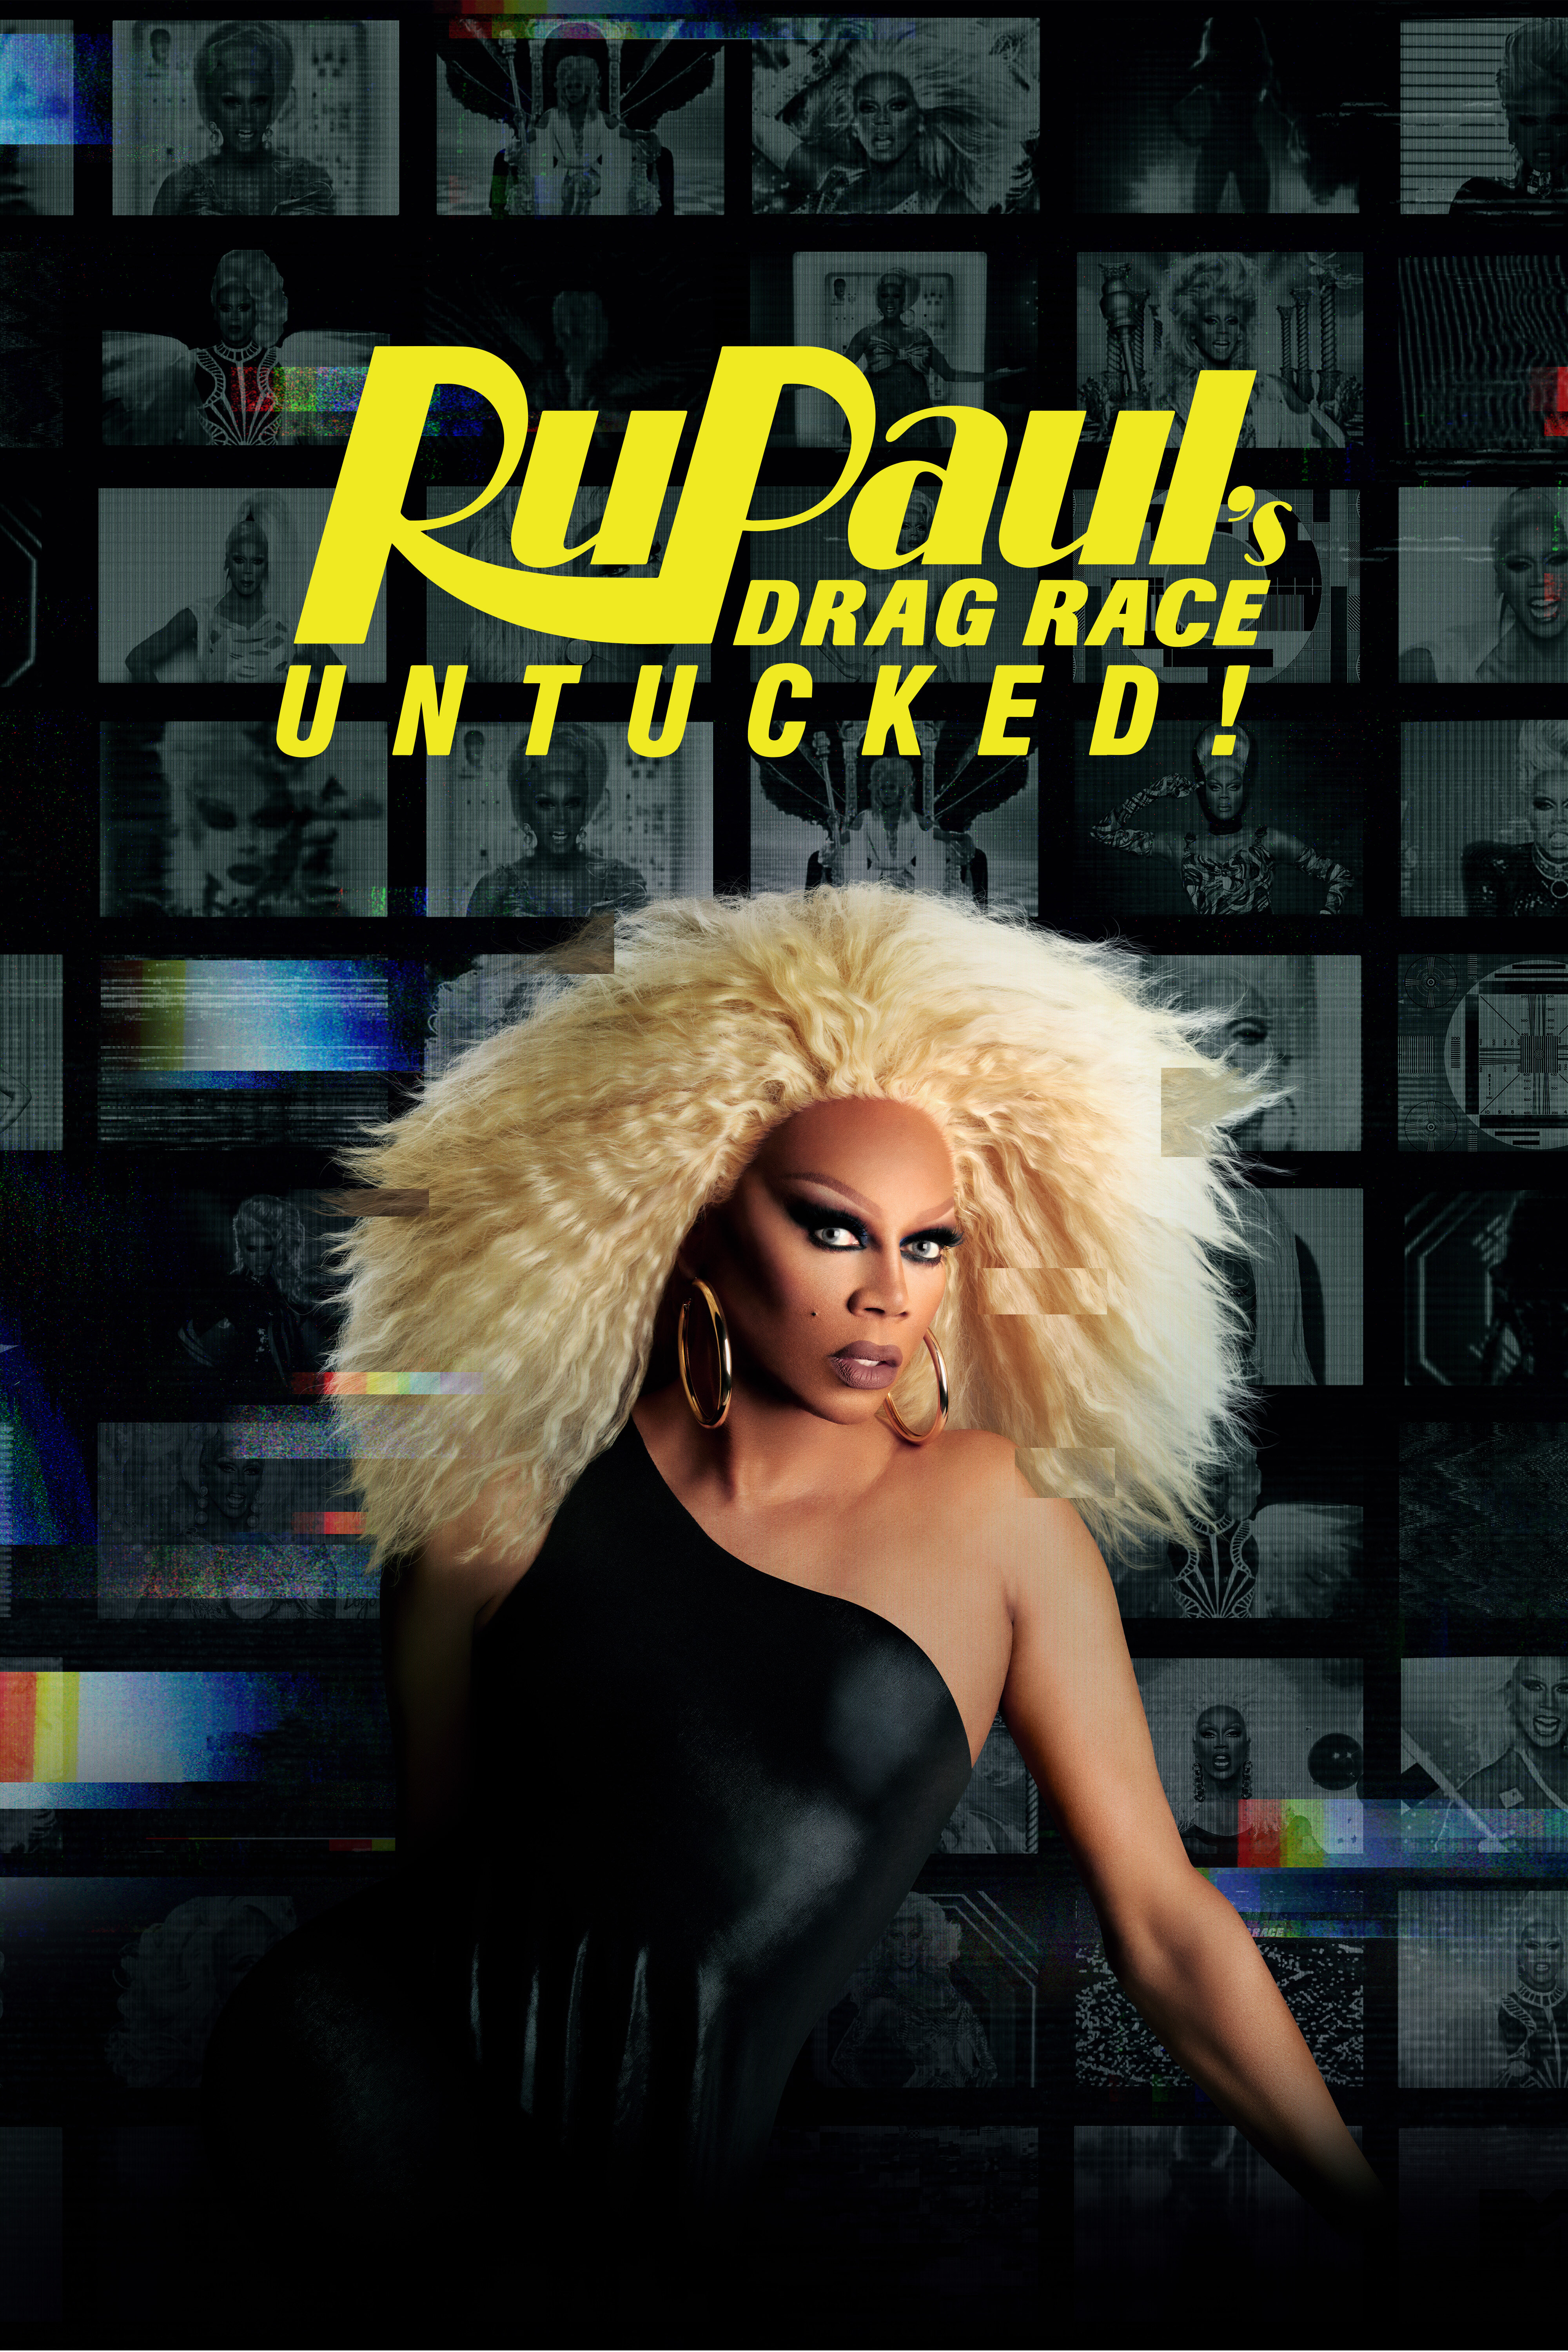 RuPaul's Drag Race: Untucked! ne zaman